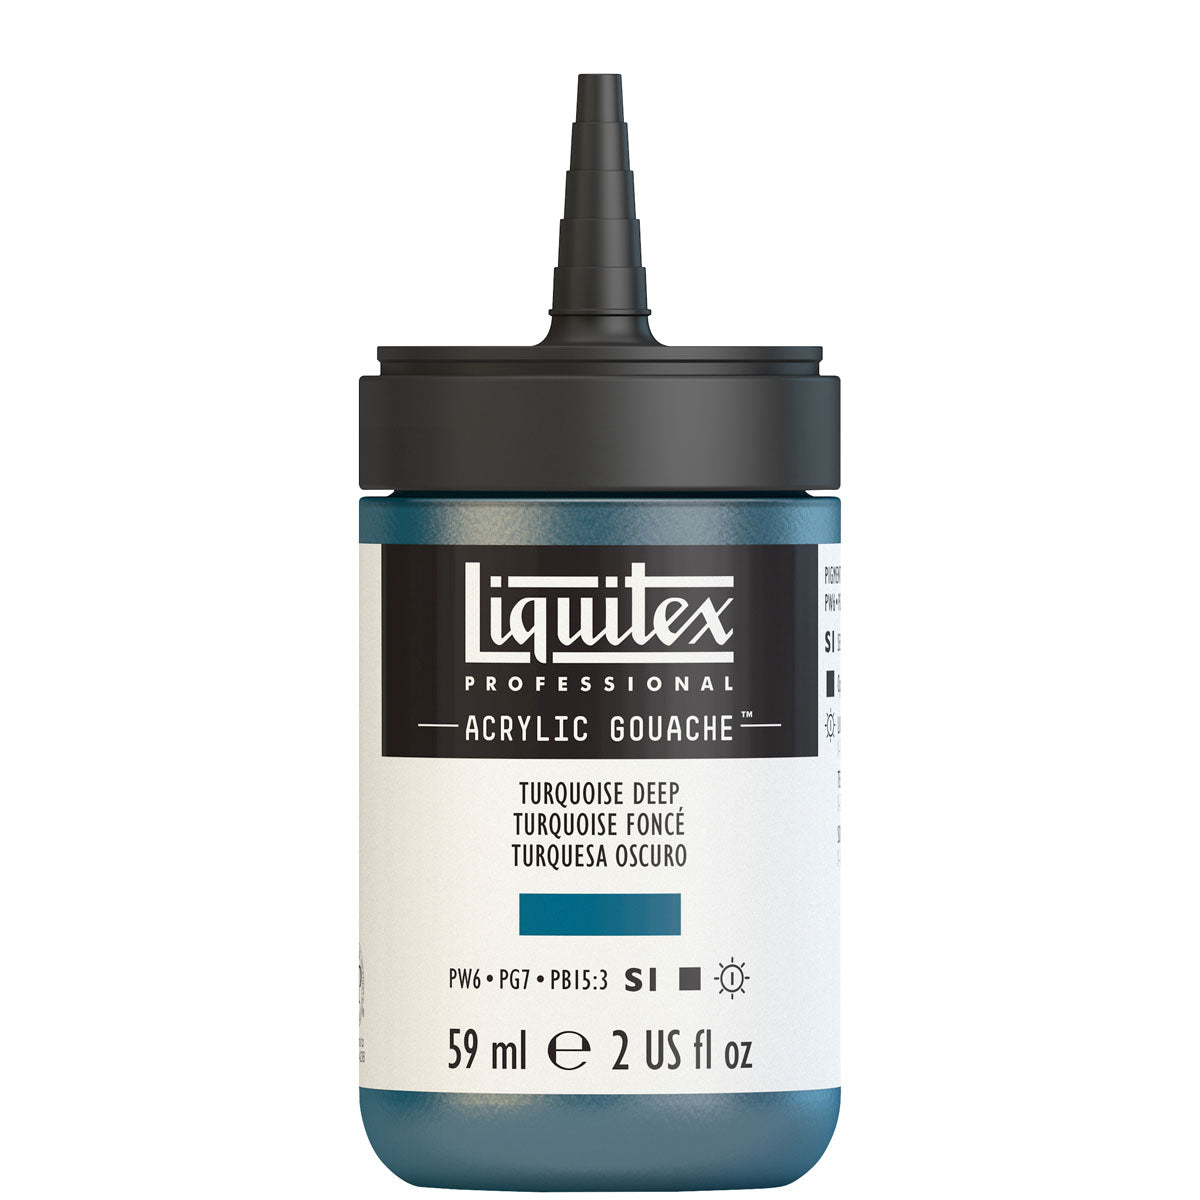 Liquitex - Acrylic Gouache 59ml S1 - Turquoise Deep